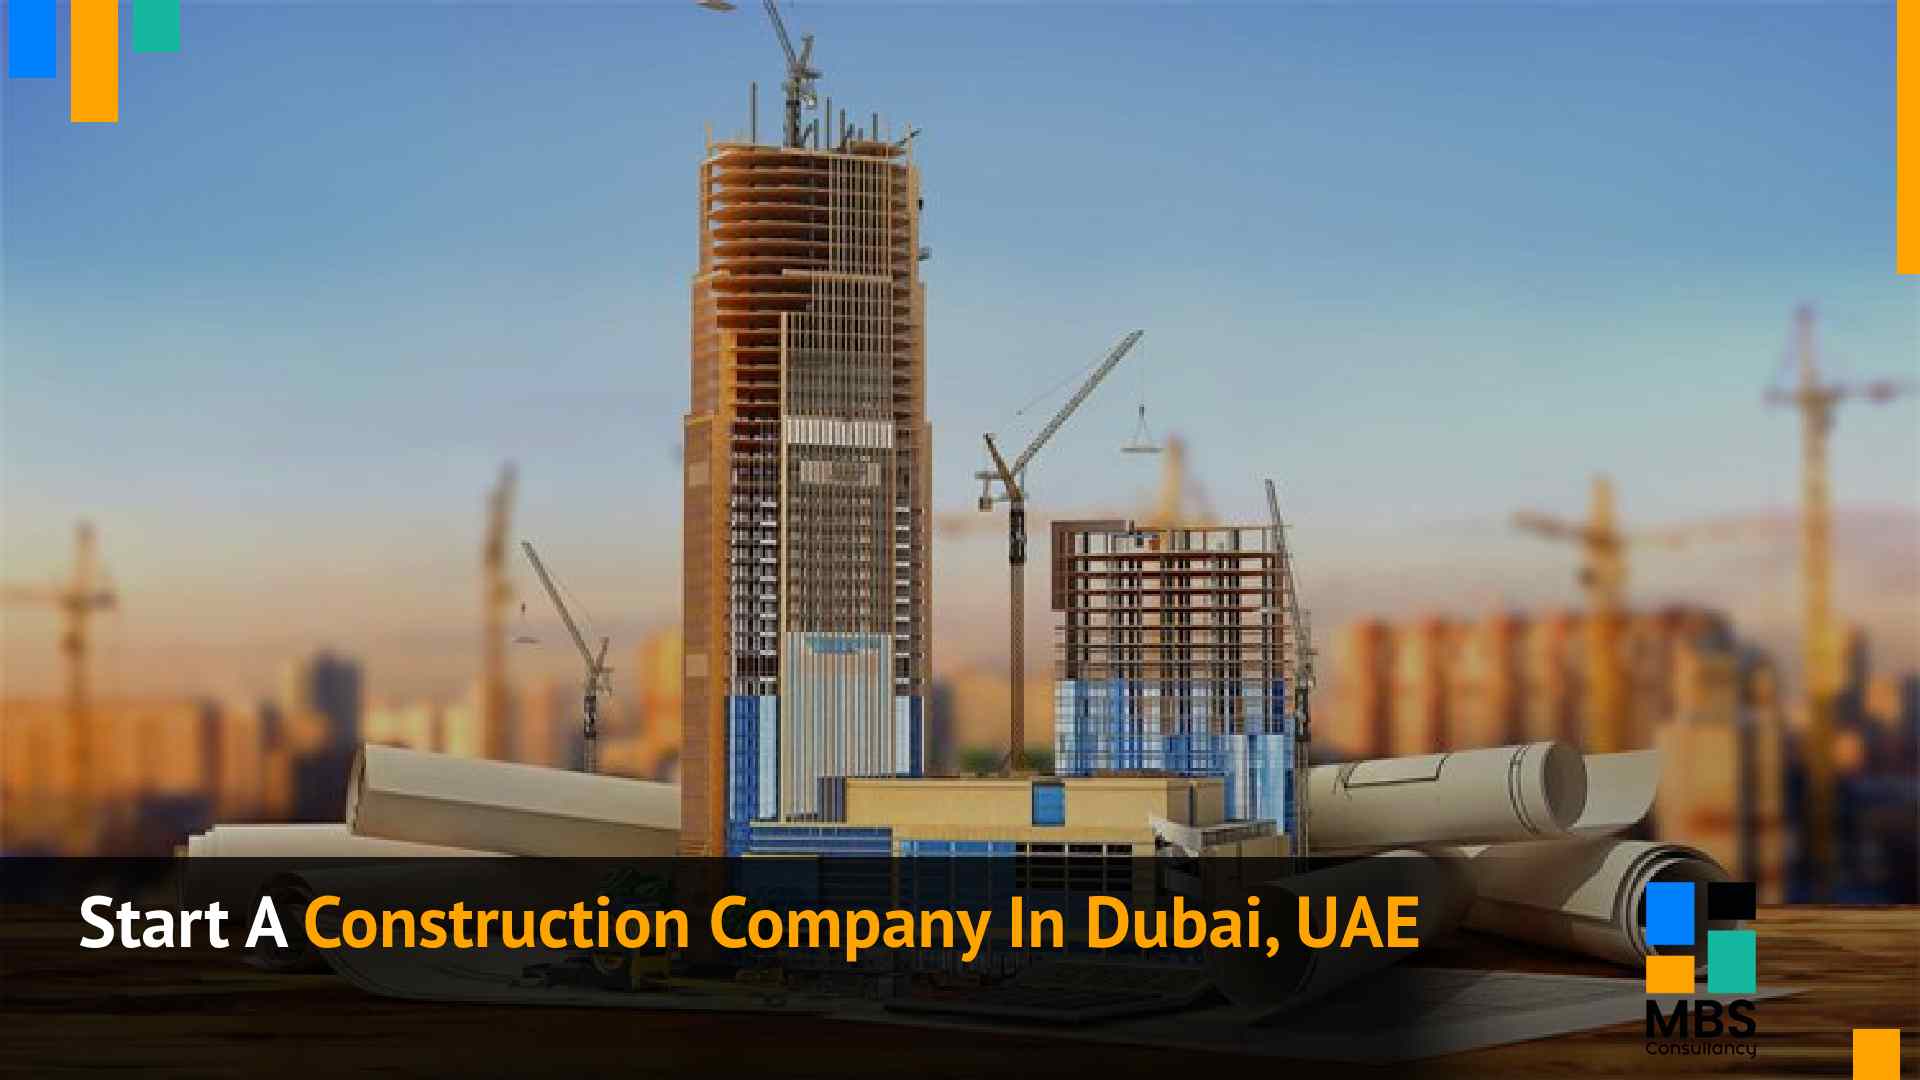 Construction company in Dubai